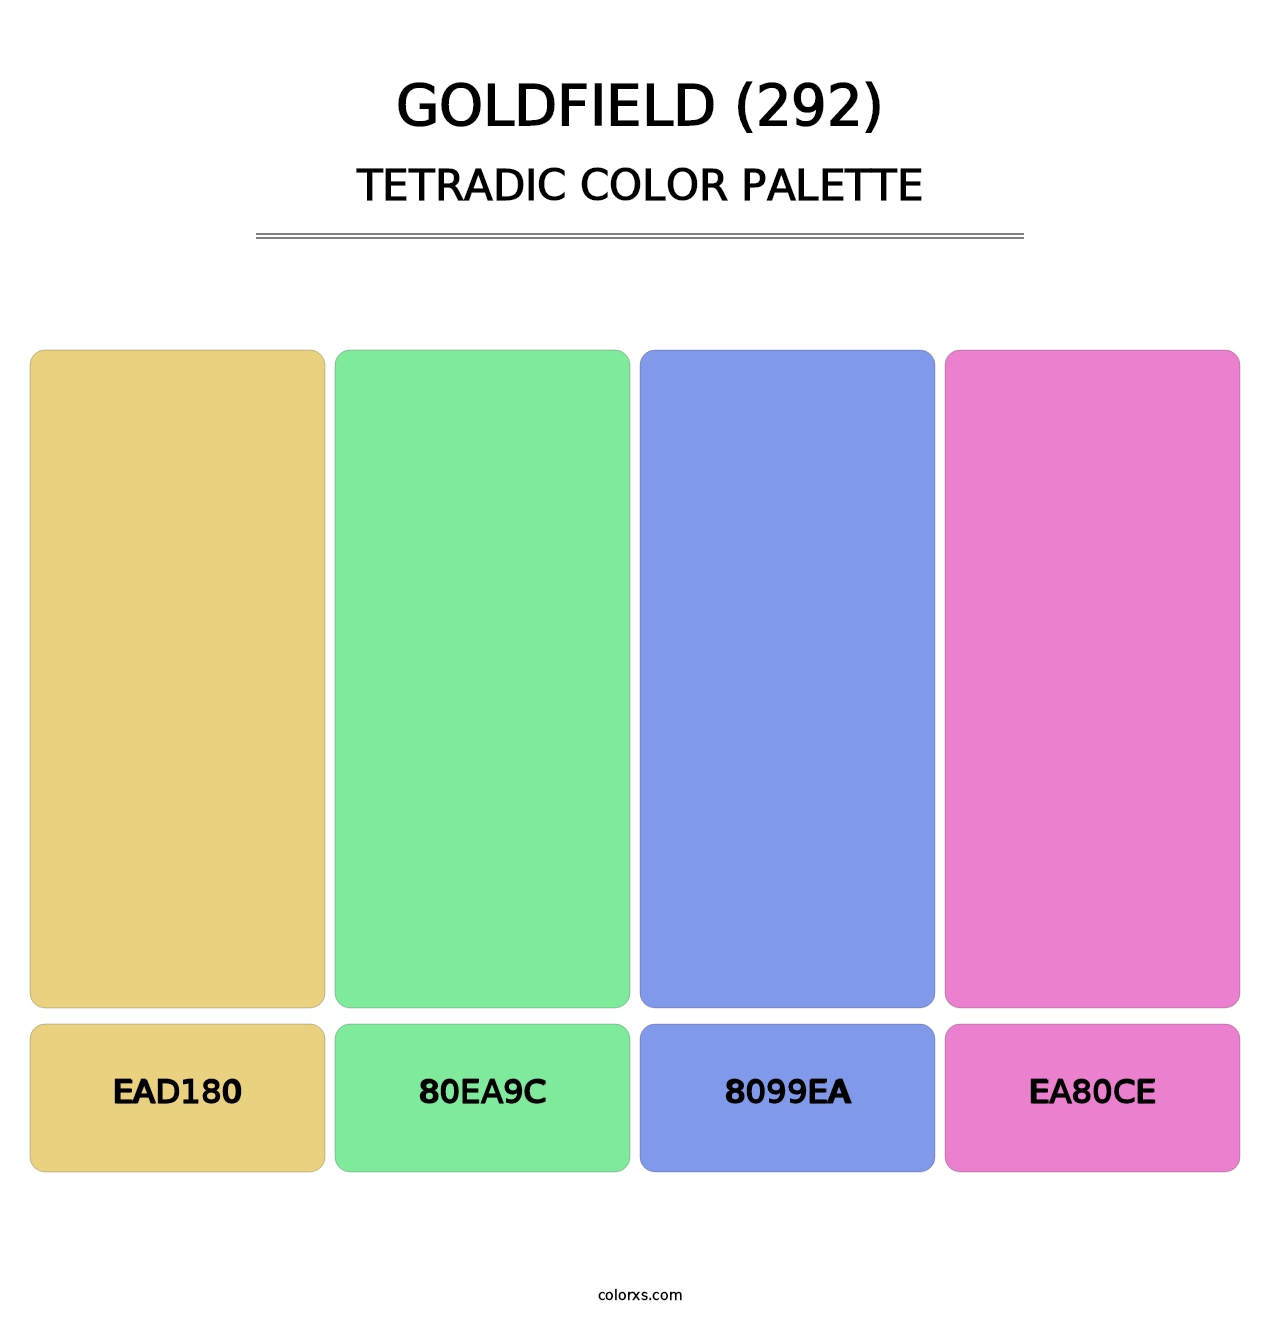 Goldfield (292) - Tetradic Color Palette